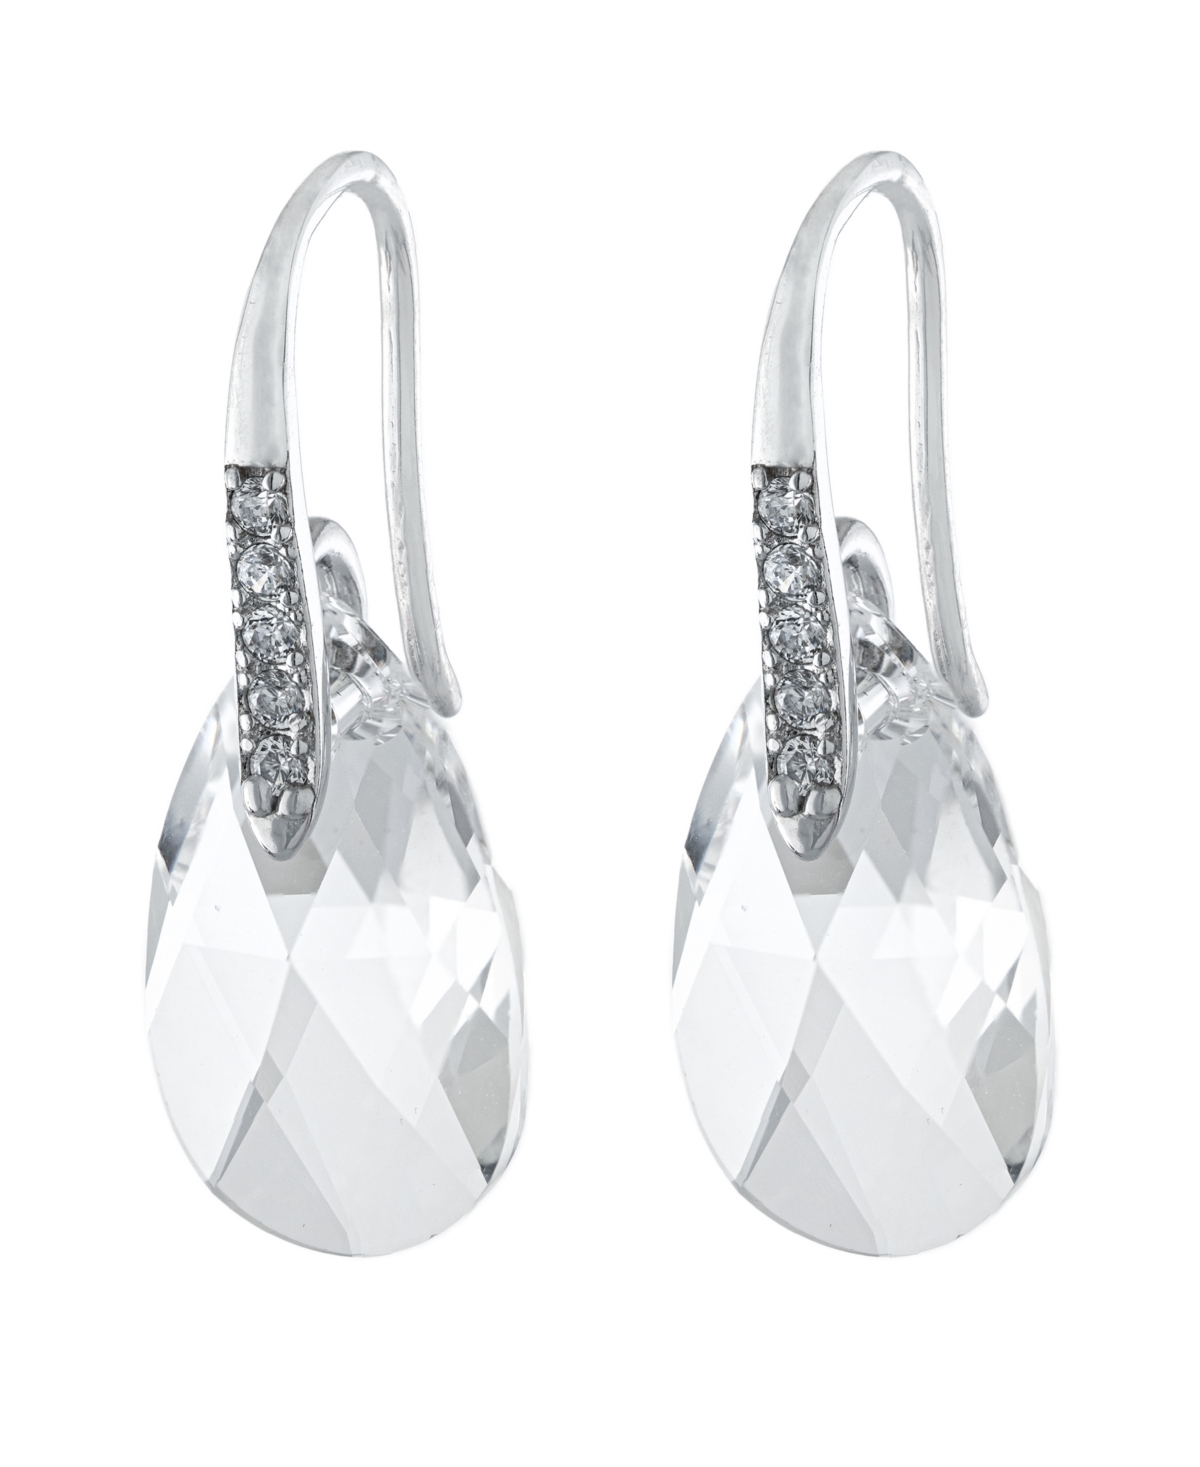 Fine Crystal and Cubic Zirconia Teardrop Wire Earrings in Sterling Silver - White